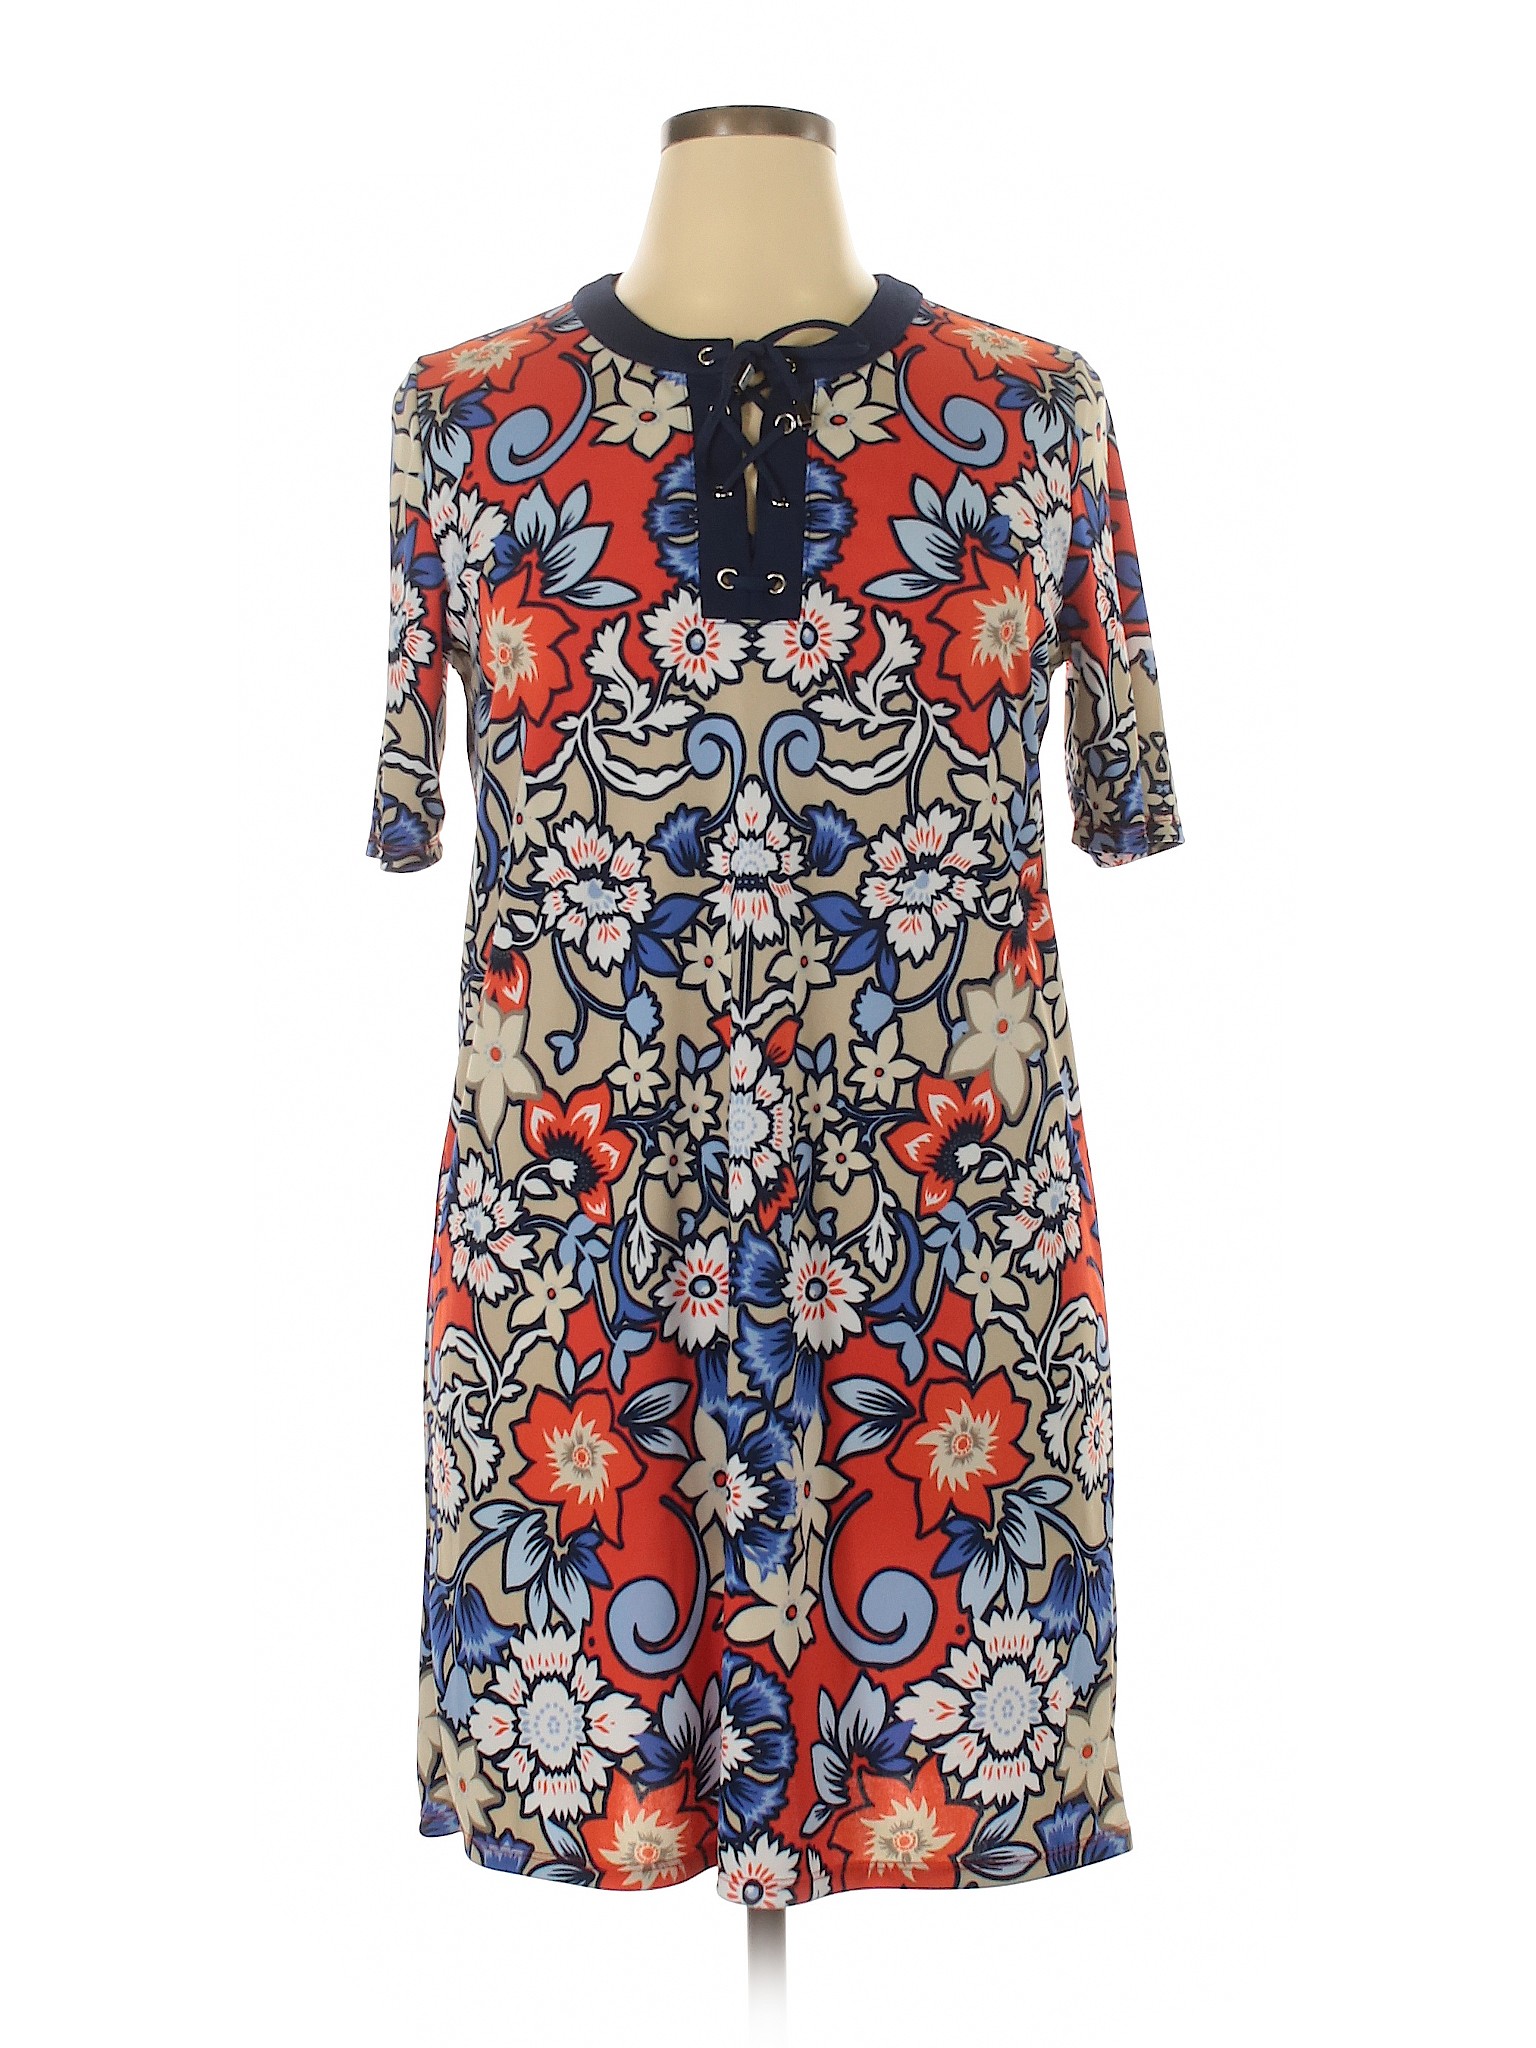 Liz Claiborne Women Blue Casual Dress XL Petite | eBay